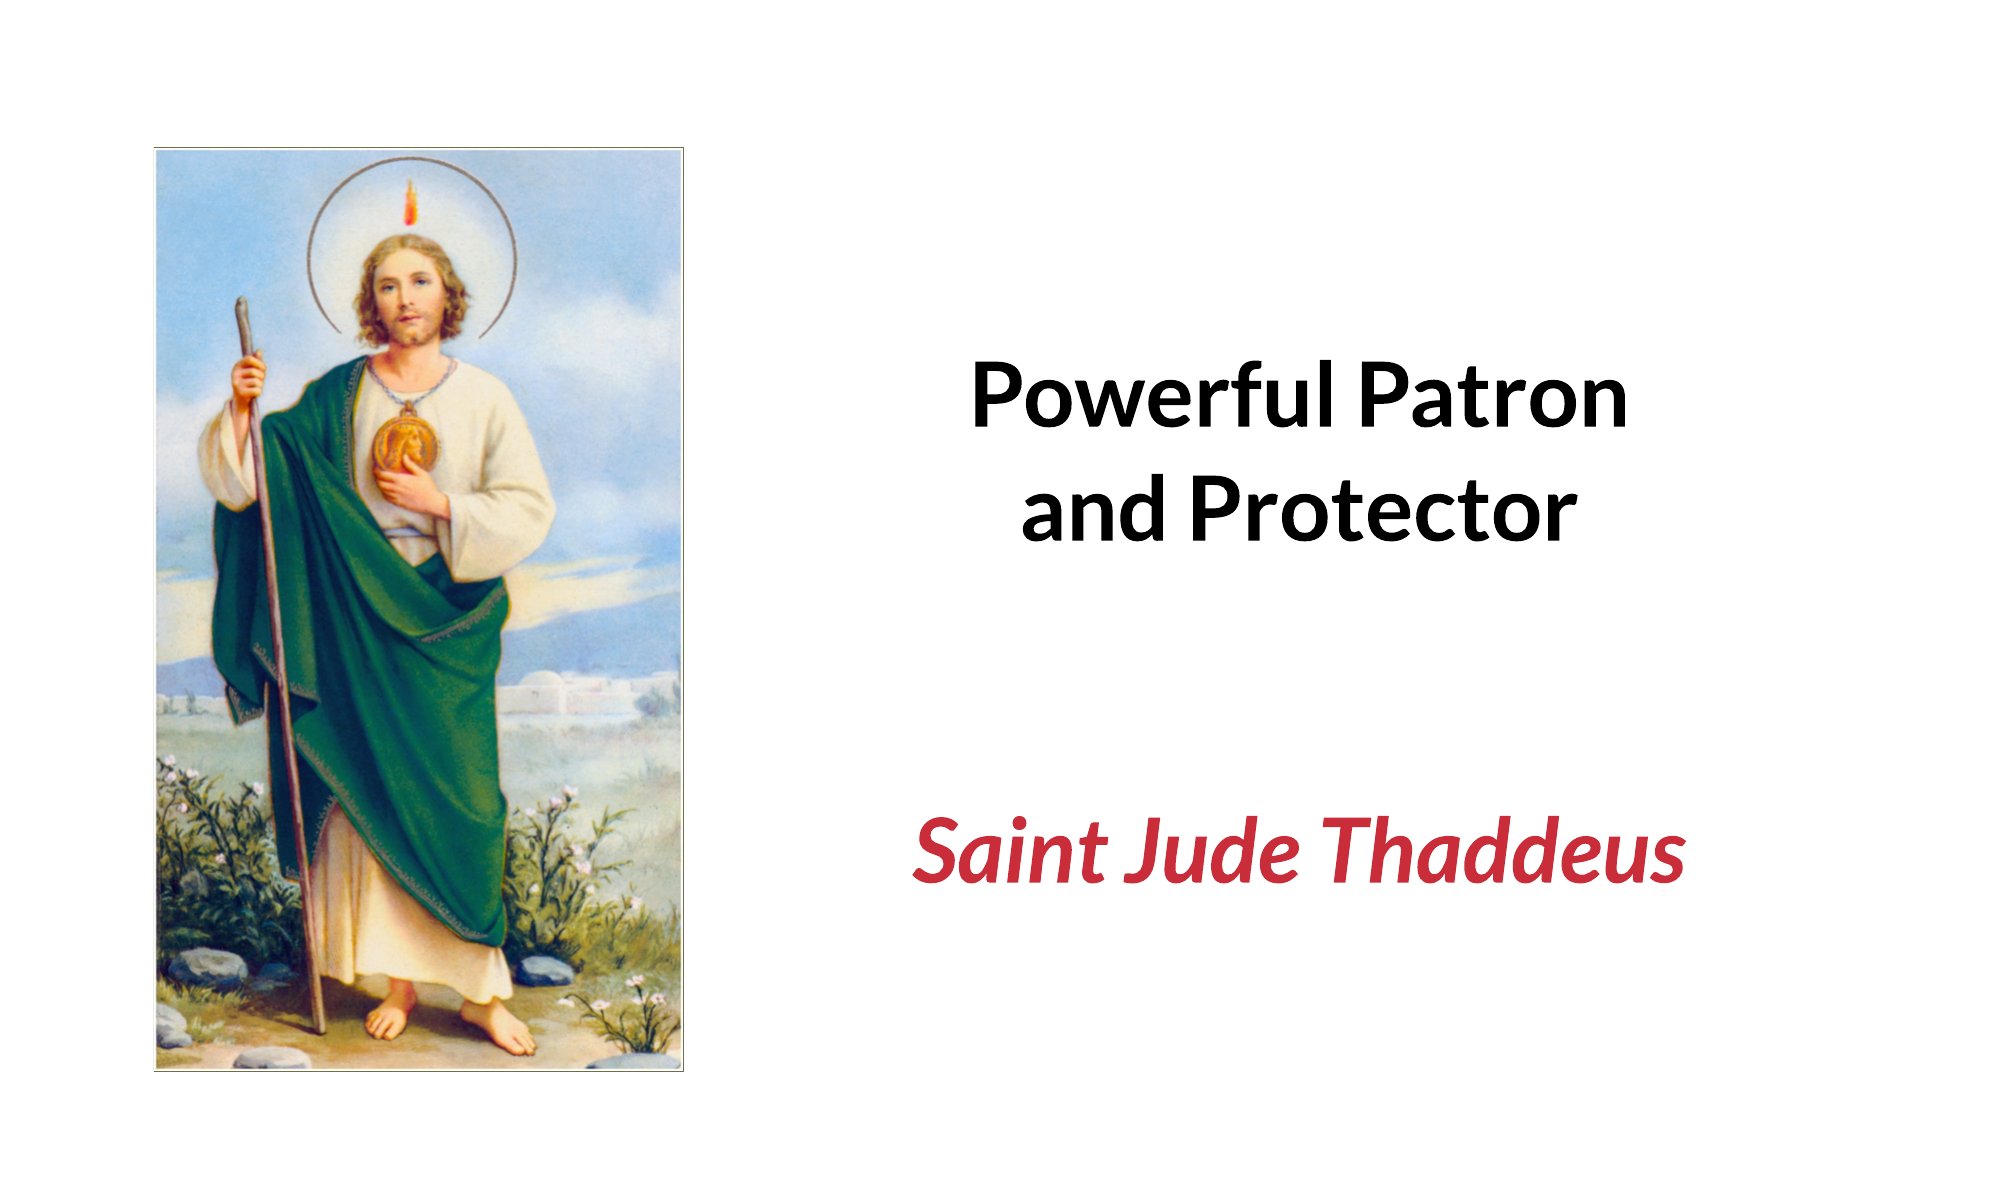 Saint Jude Thaddeus